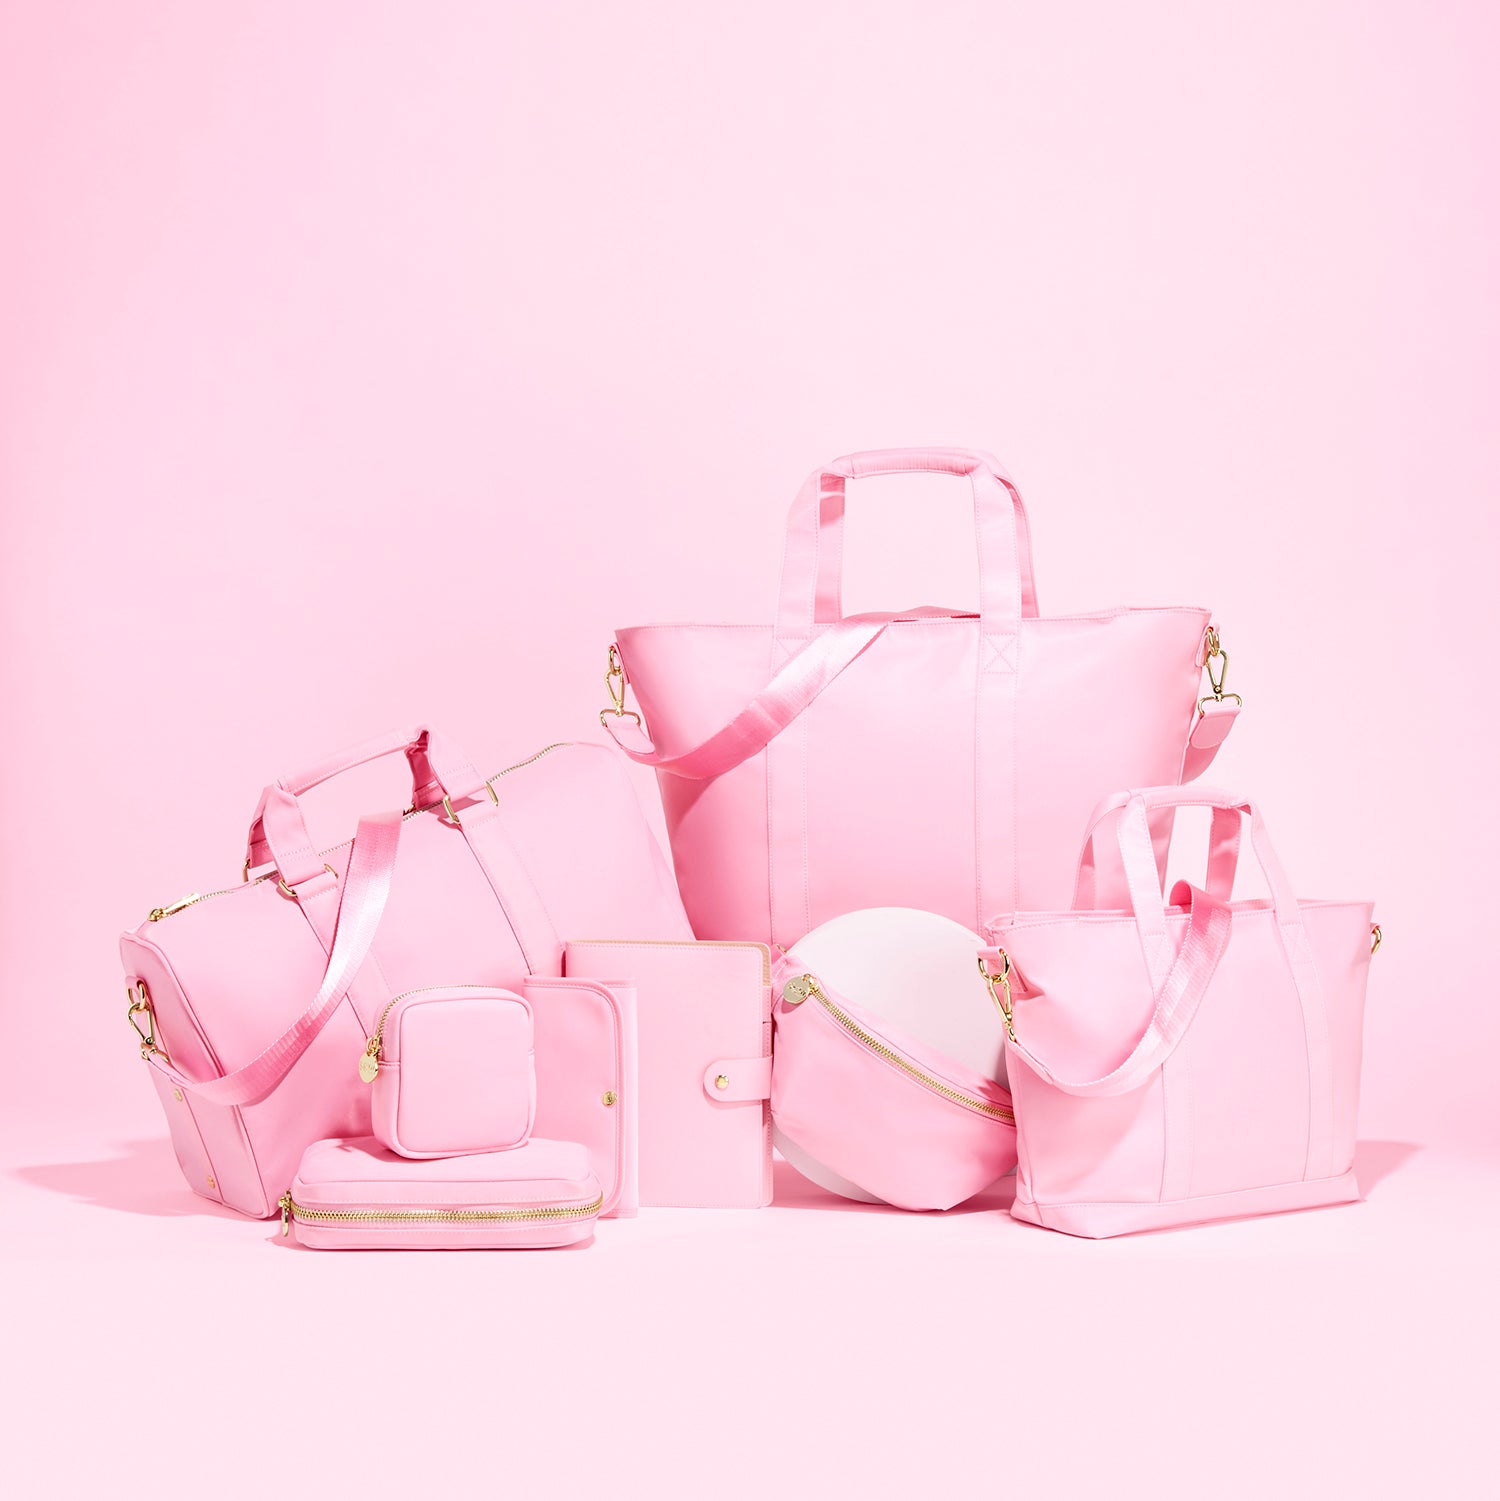 Custom Duffle Bags. Create & Design Your Own Duffle Bags